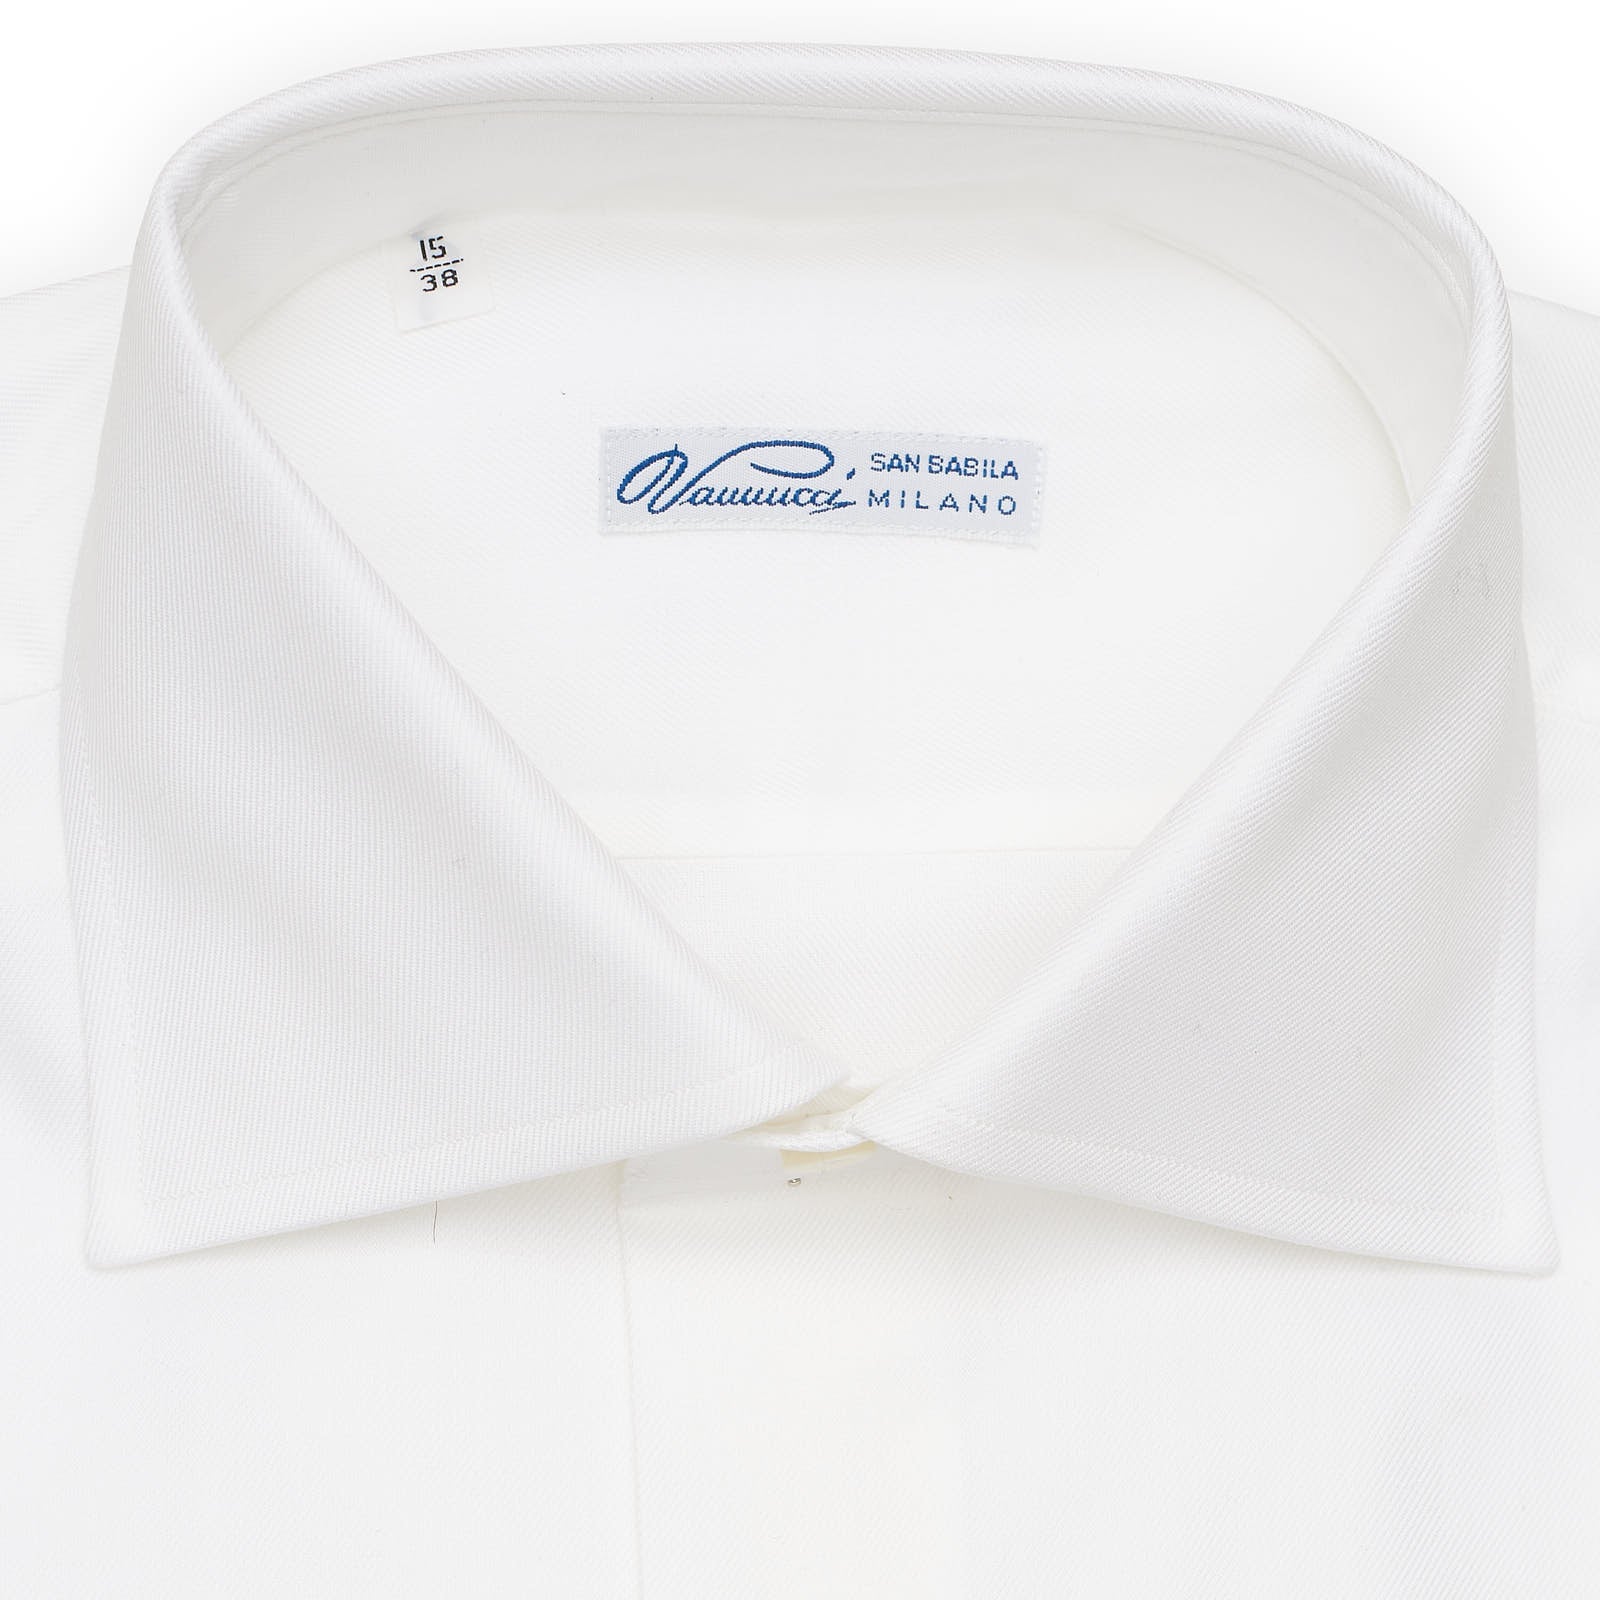 VANNUCCI Milano White Twill Cotton French Cuff Dress Shirt EU 38 NEW US 15